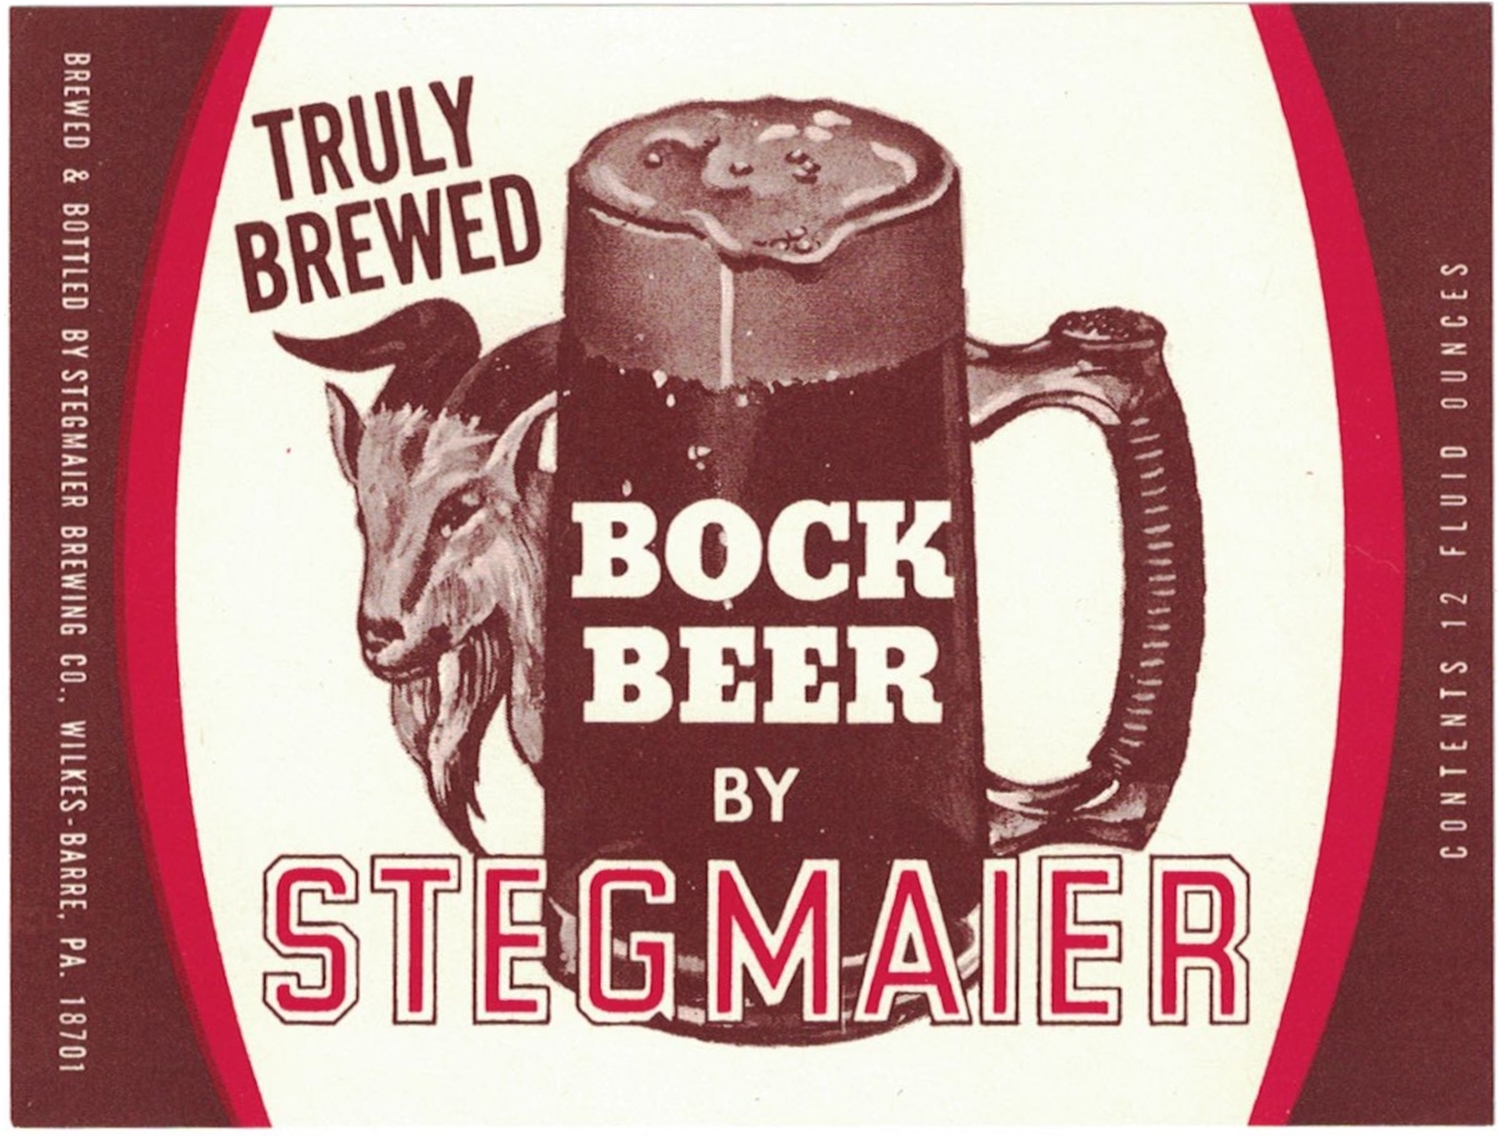 Stegmaier Bock Truly Brewed Beer Label